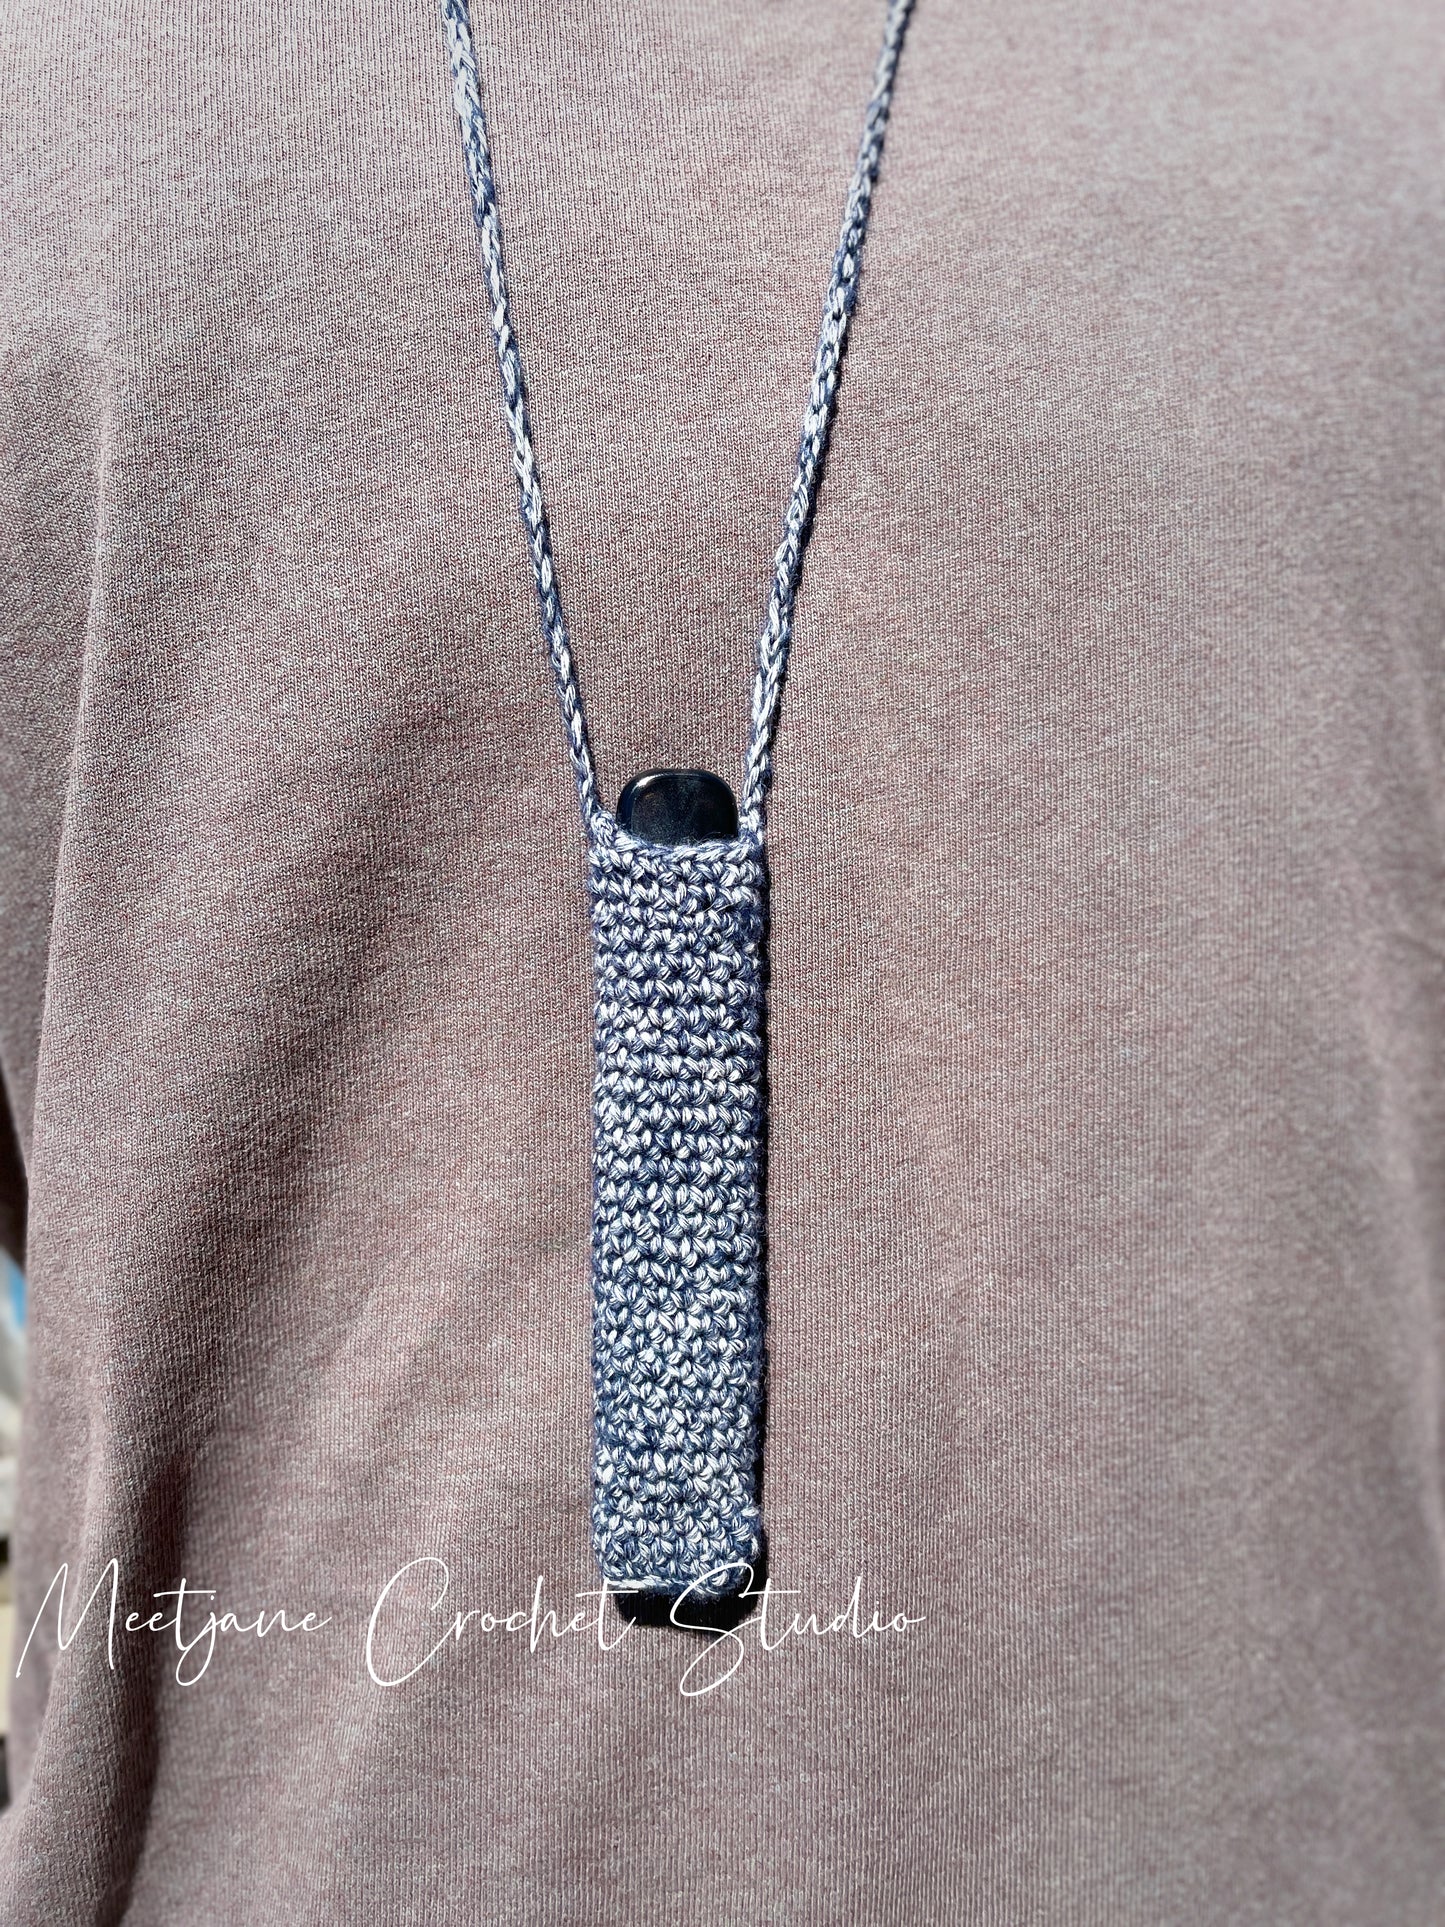 Crochet Accessories|Melbourne handmade|Vape holder